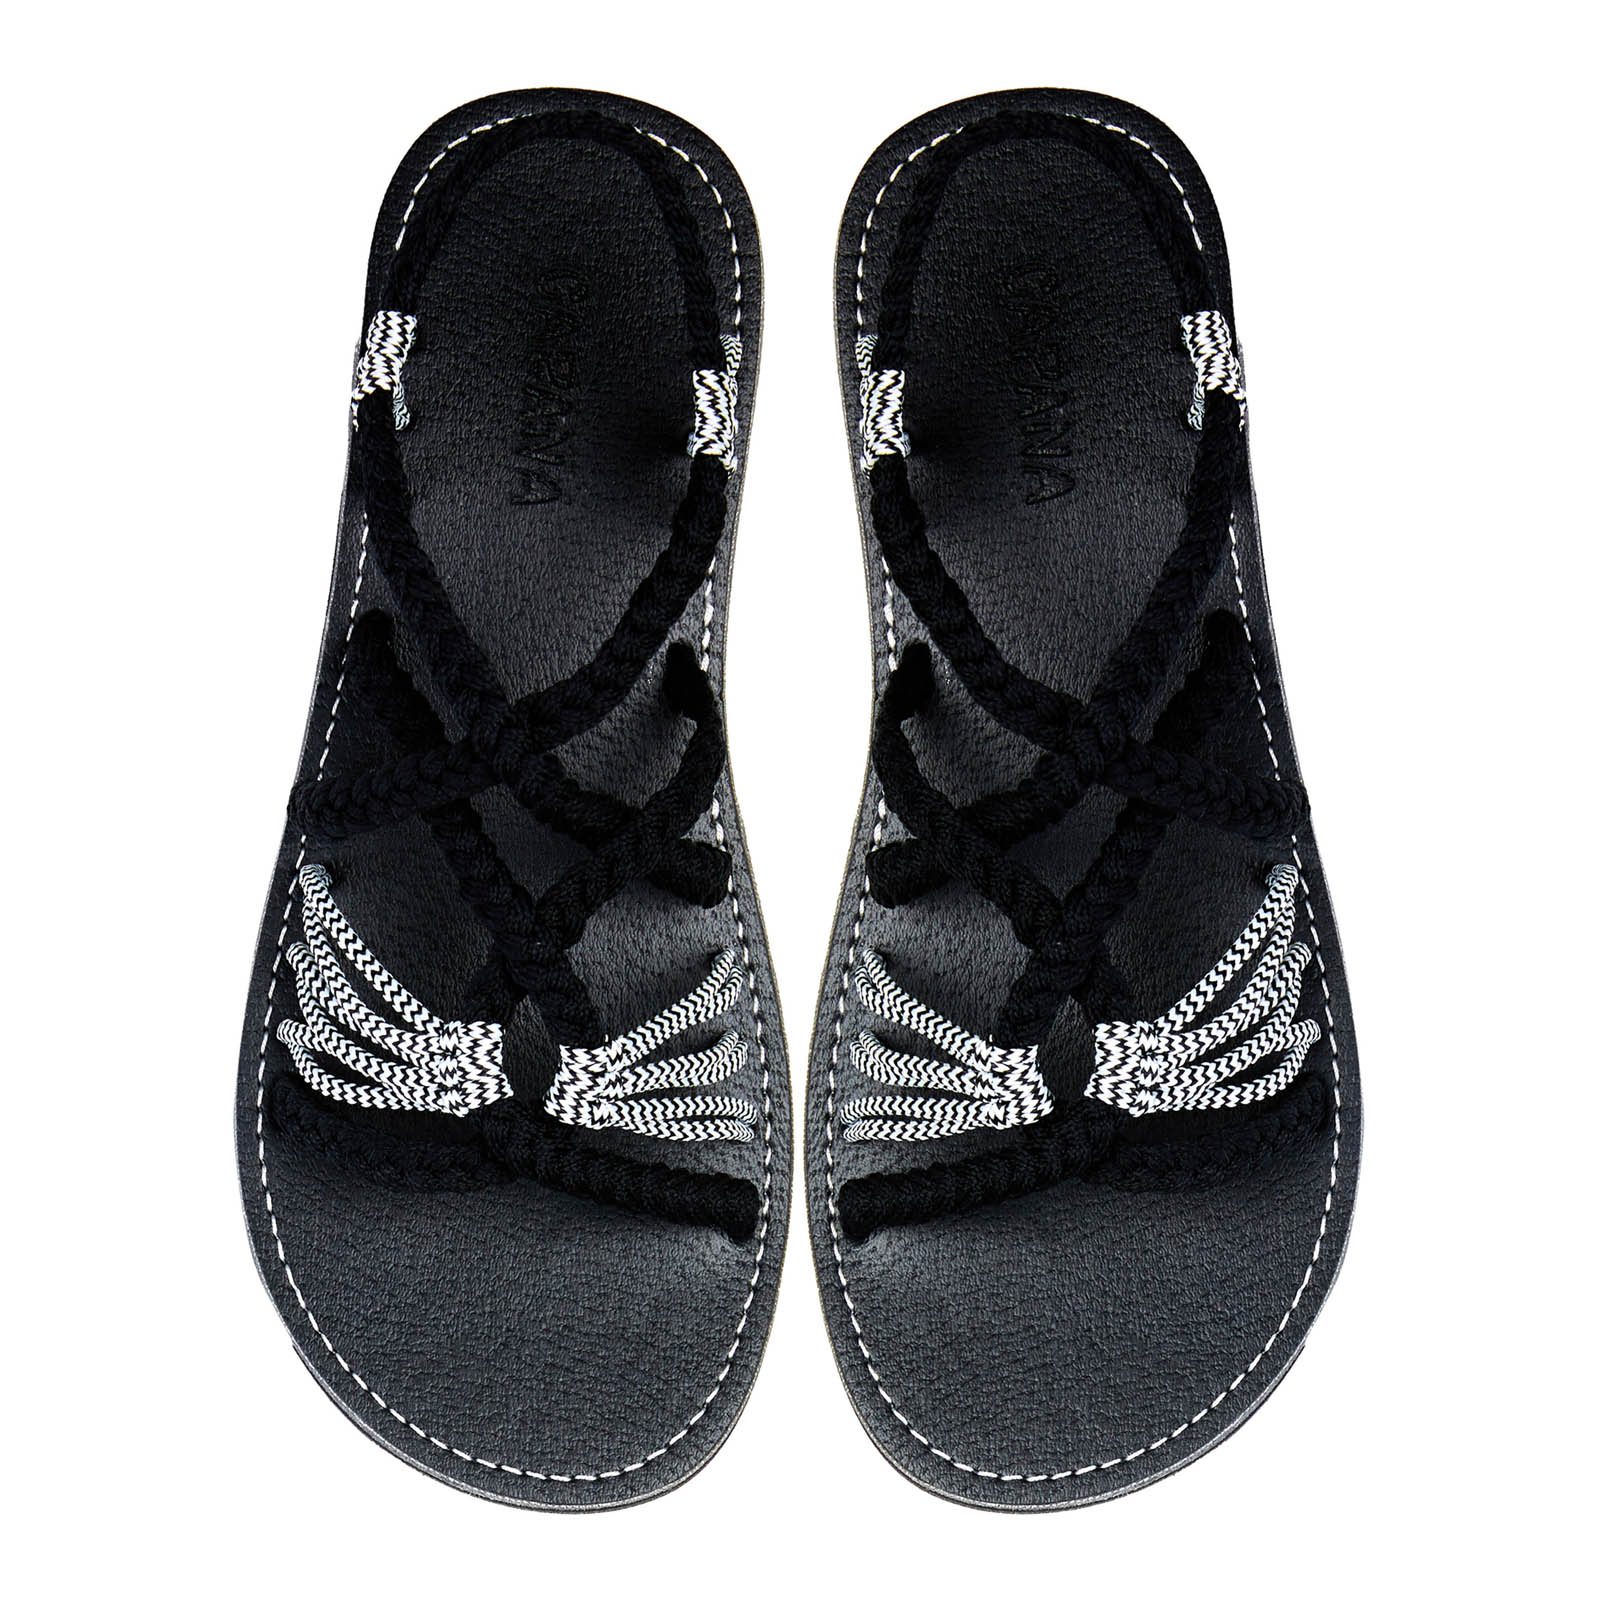 Relax - Black Zebra Rope Sandals